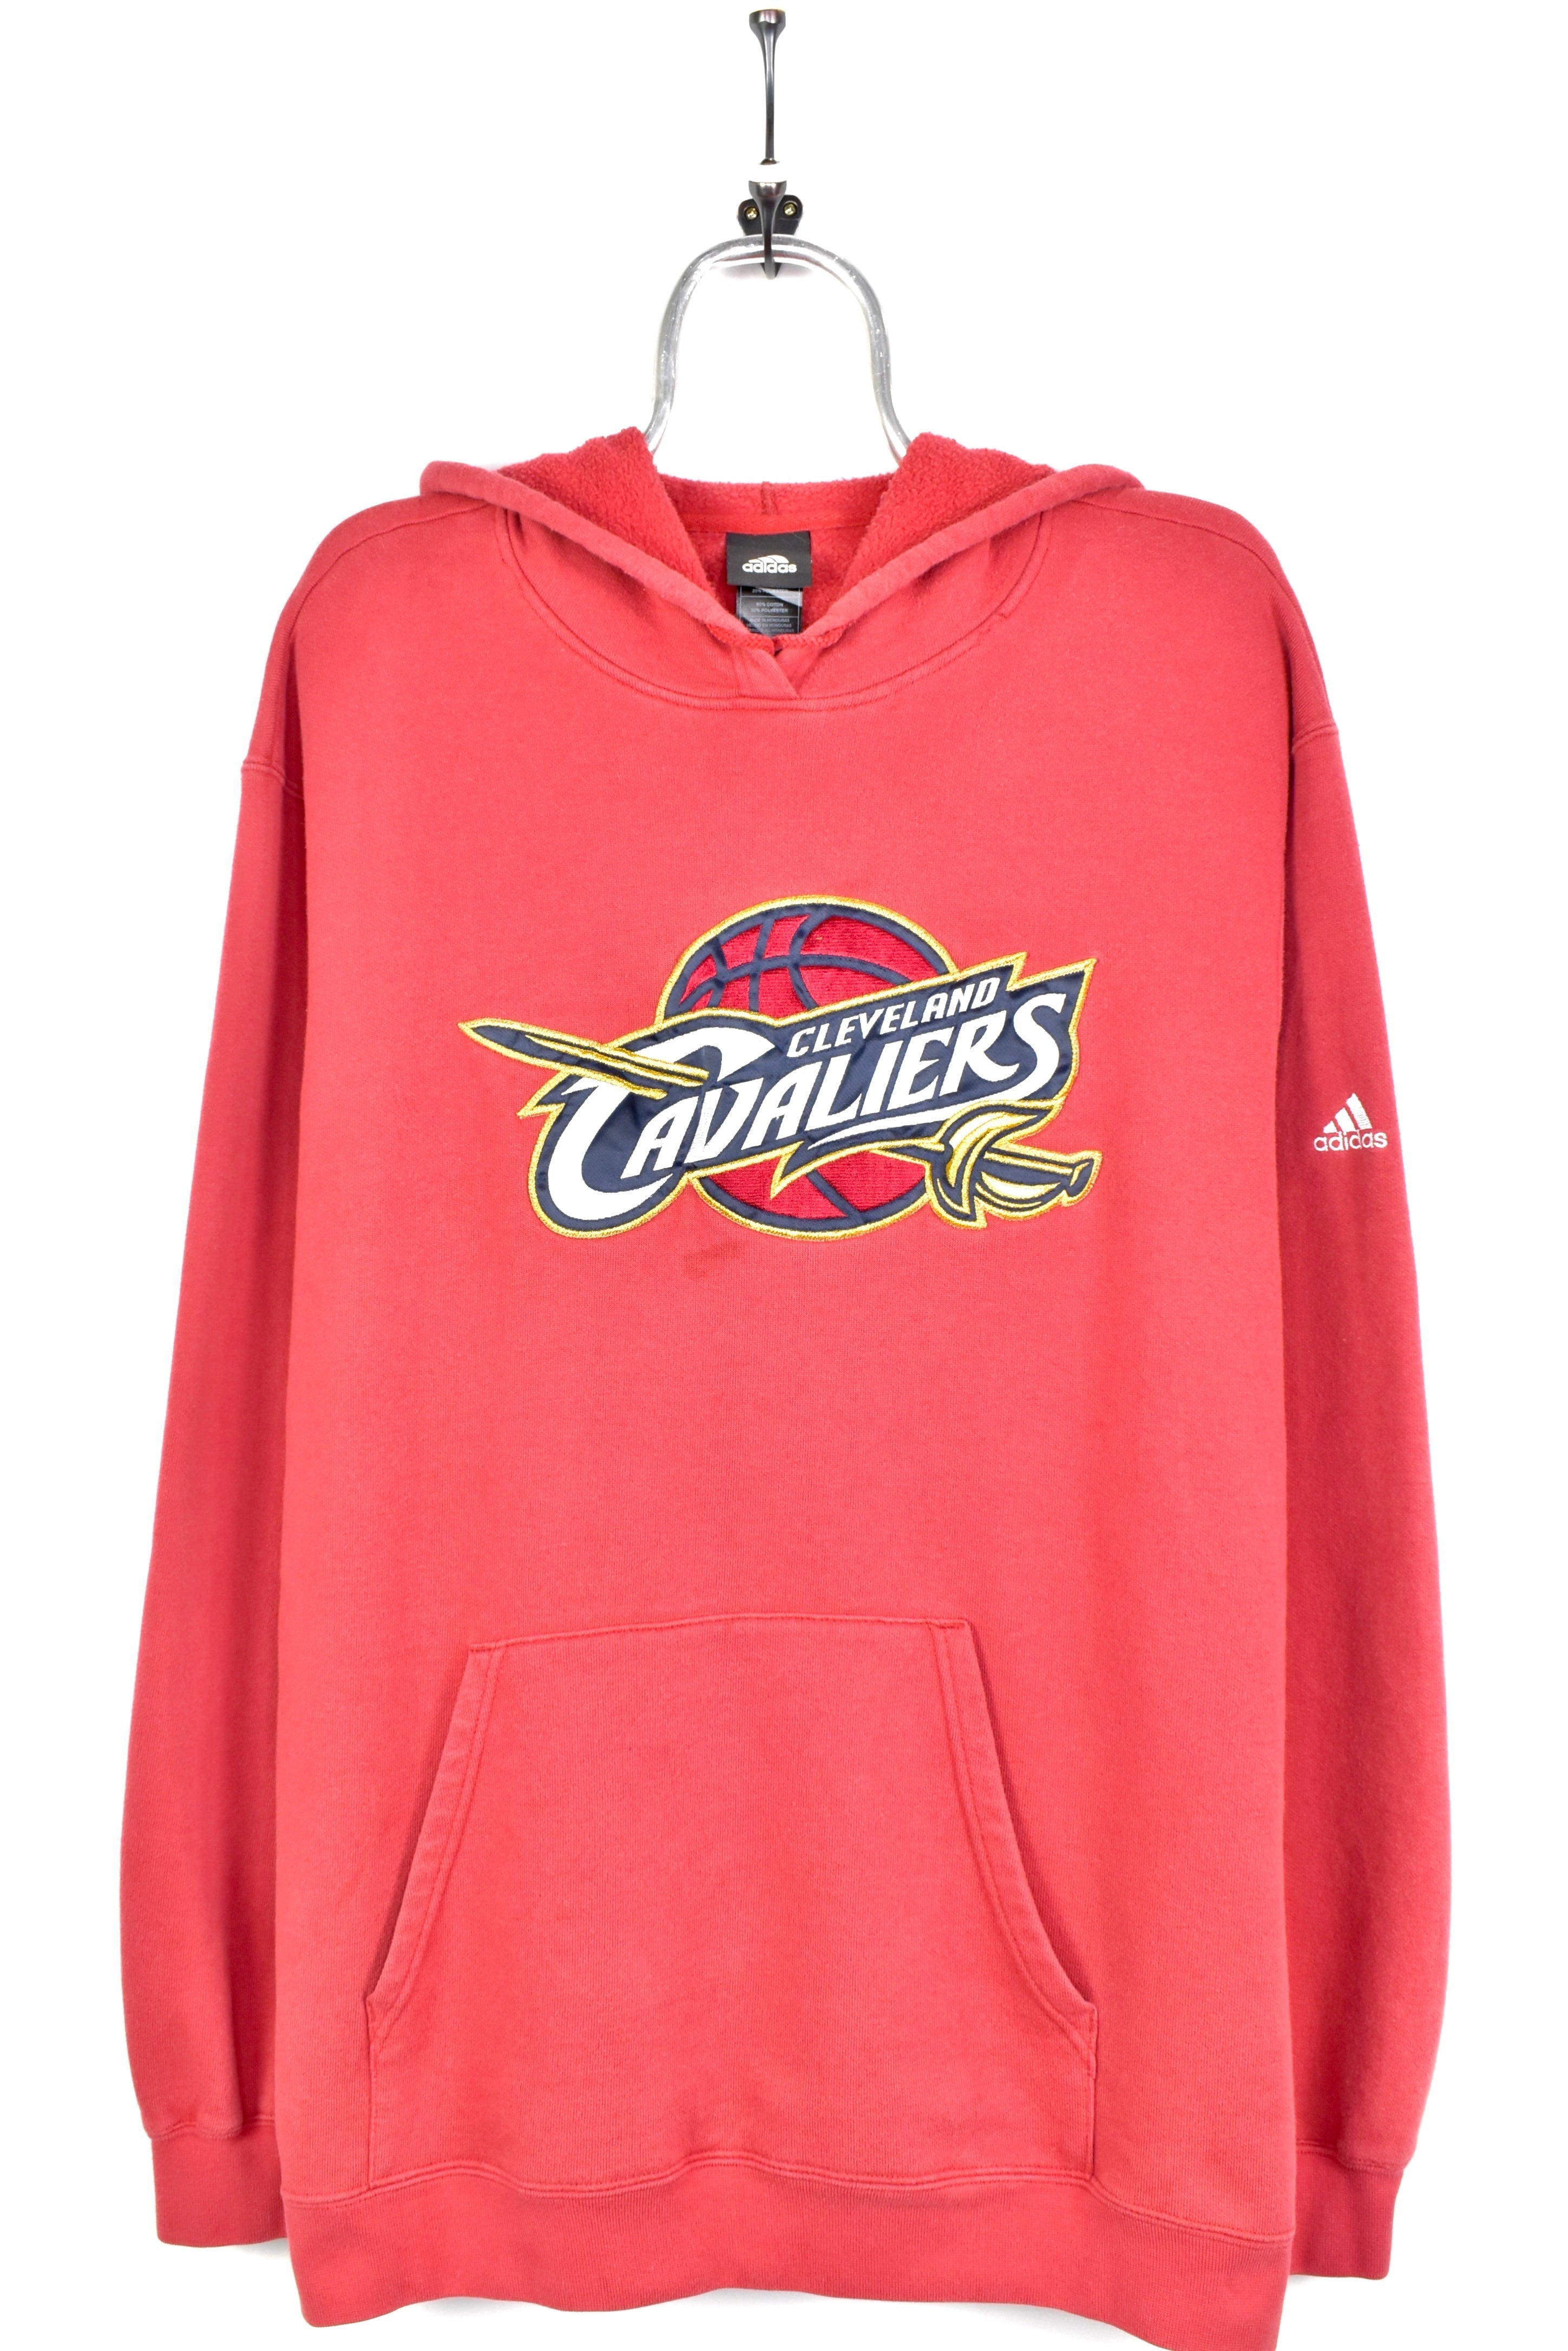 Cleveland Cavaliers Hoodies, Cavaliers Sweatshirts